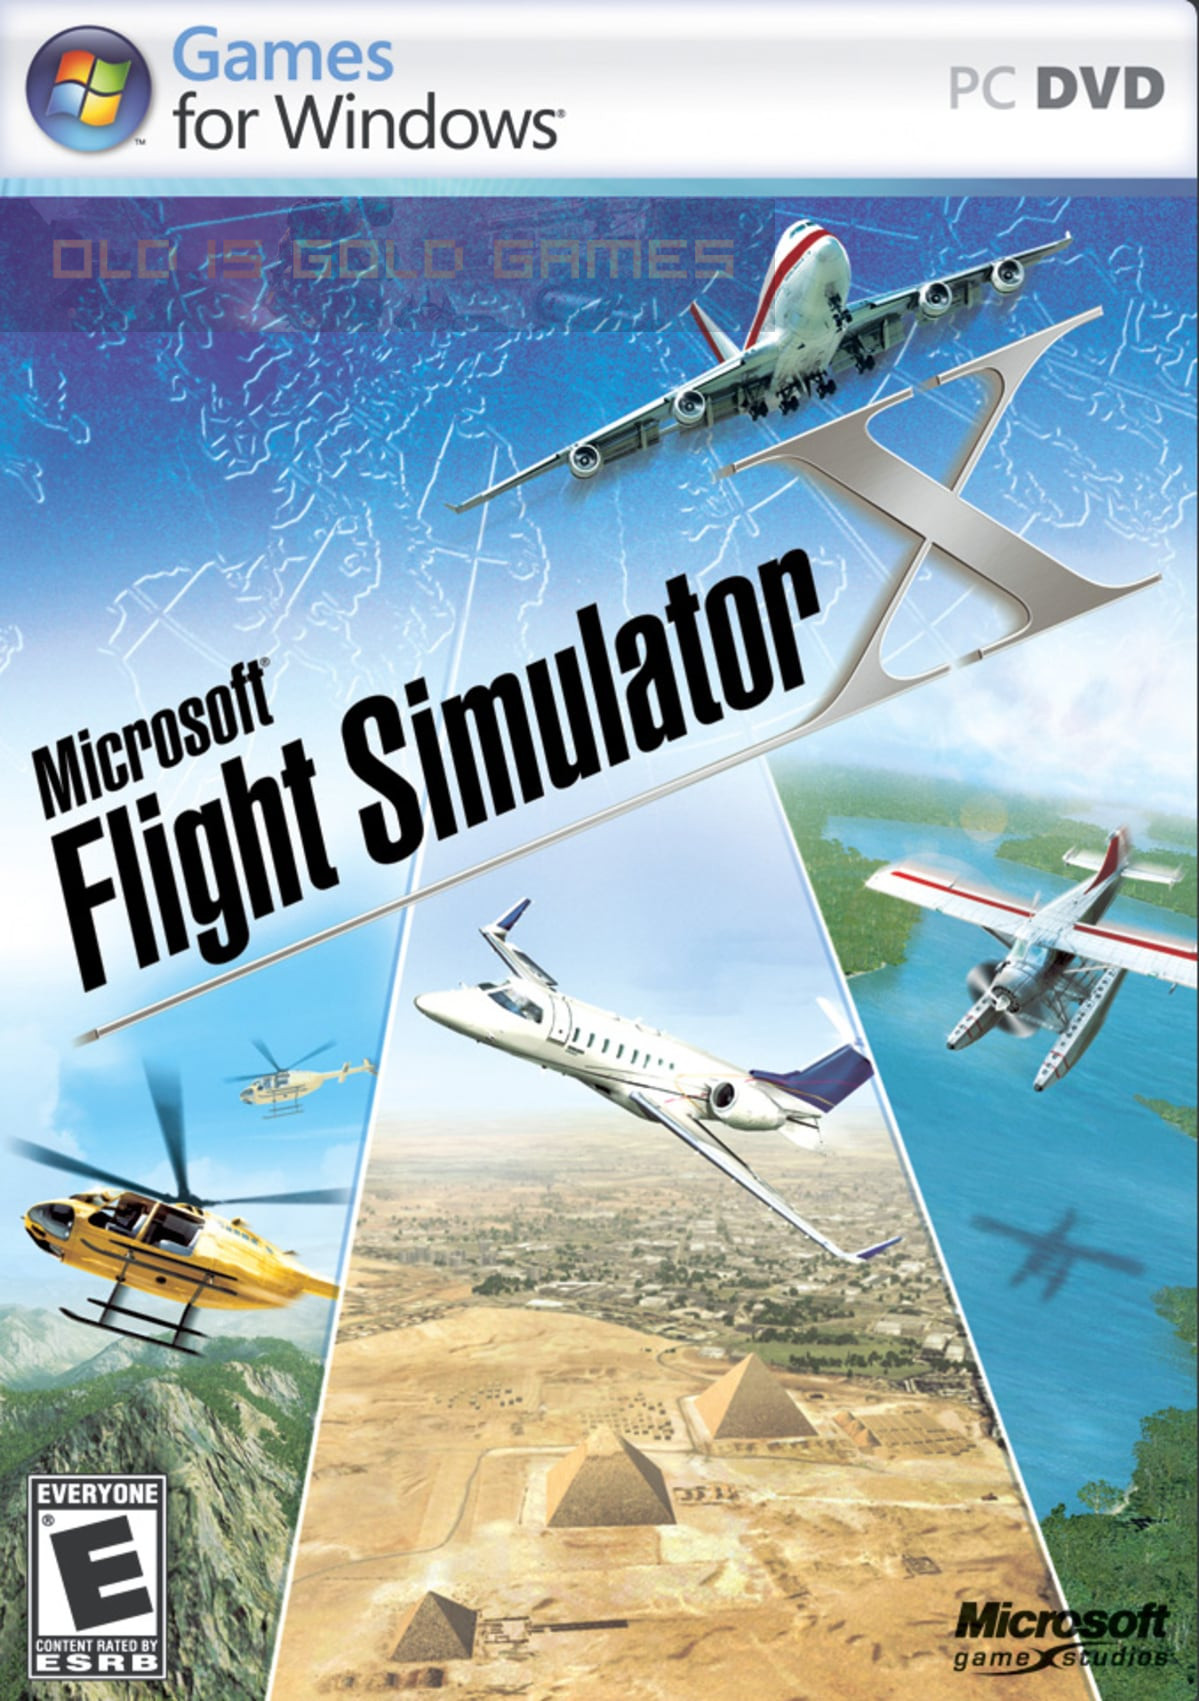 Microsoft flight simulator 2014 free. download full version pc